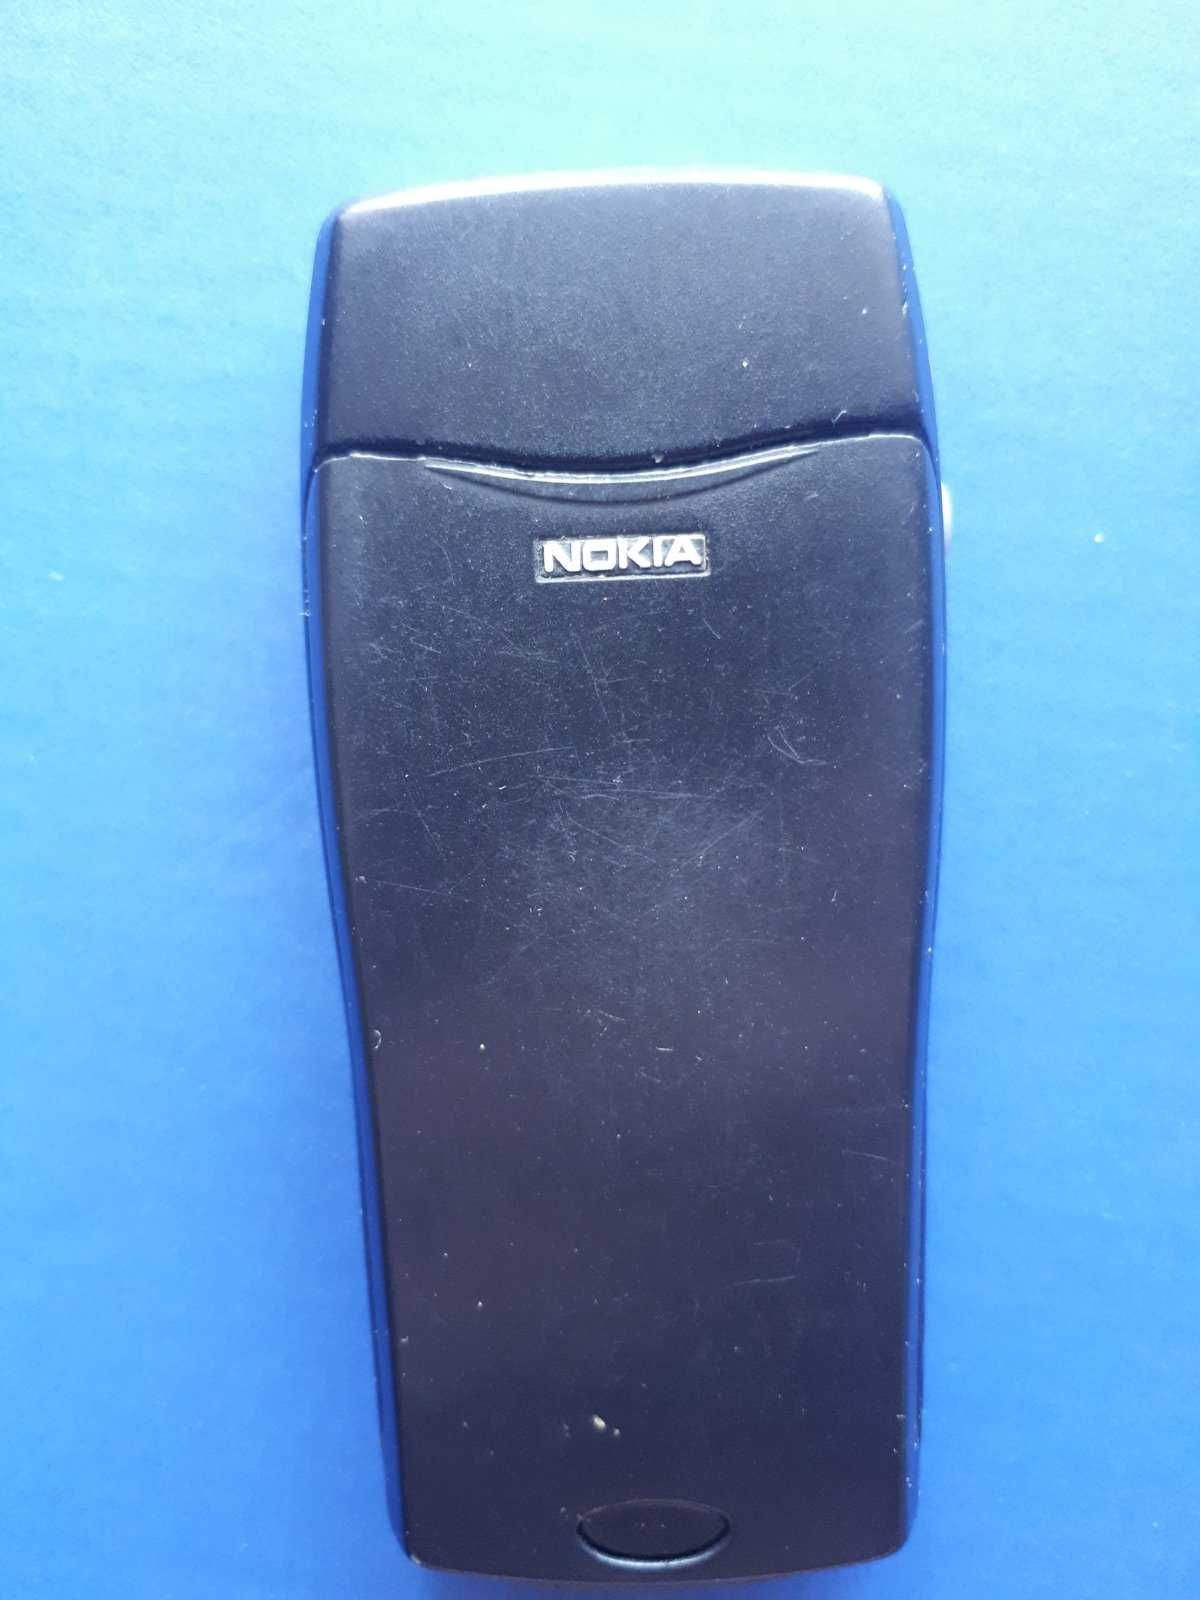 Nokia 8210 Finland